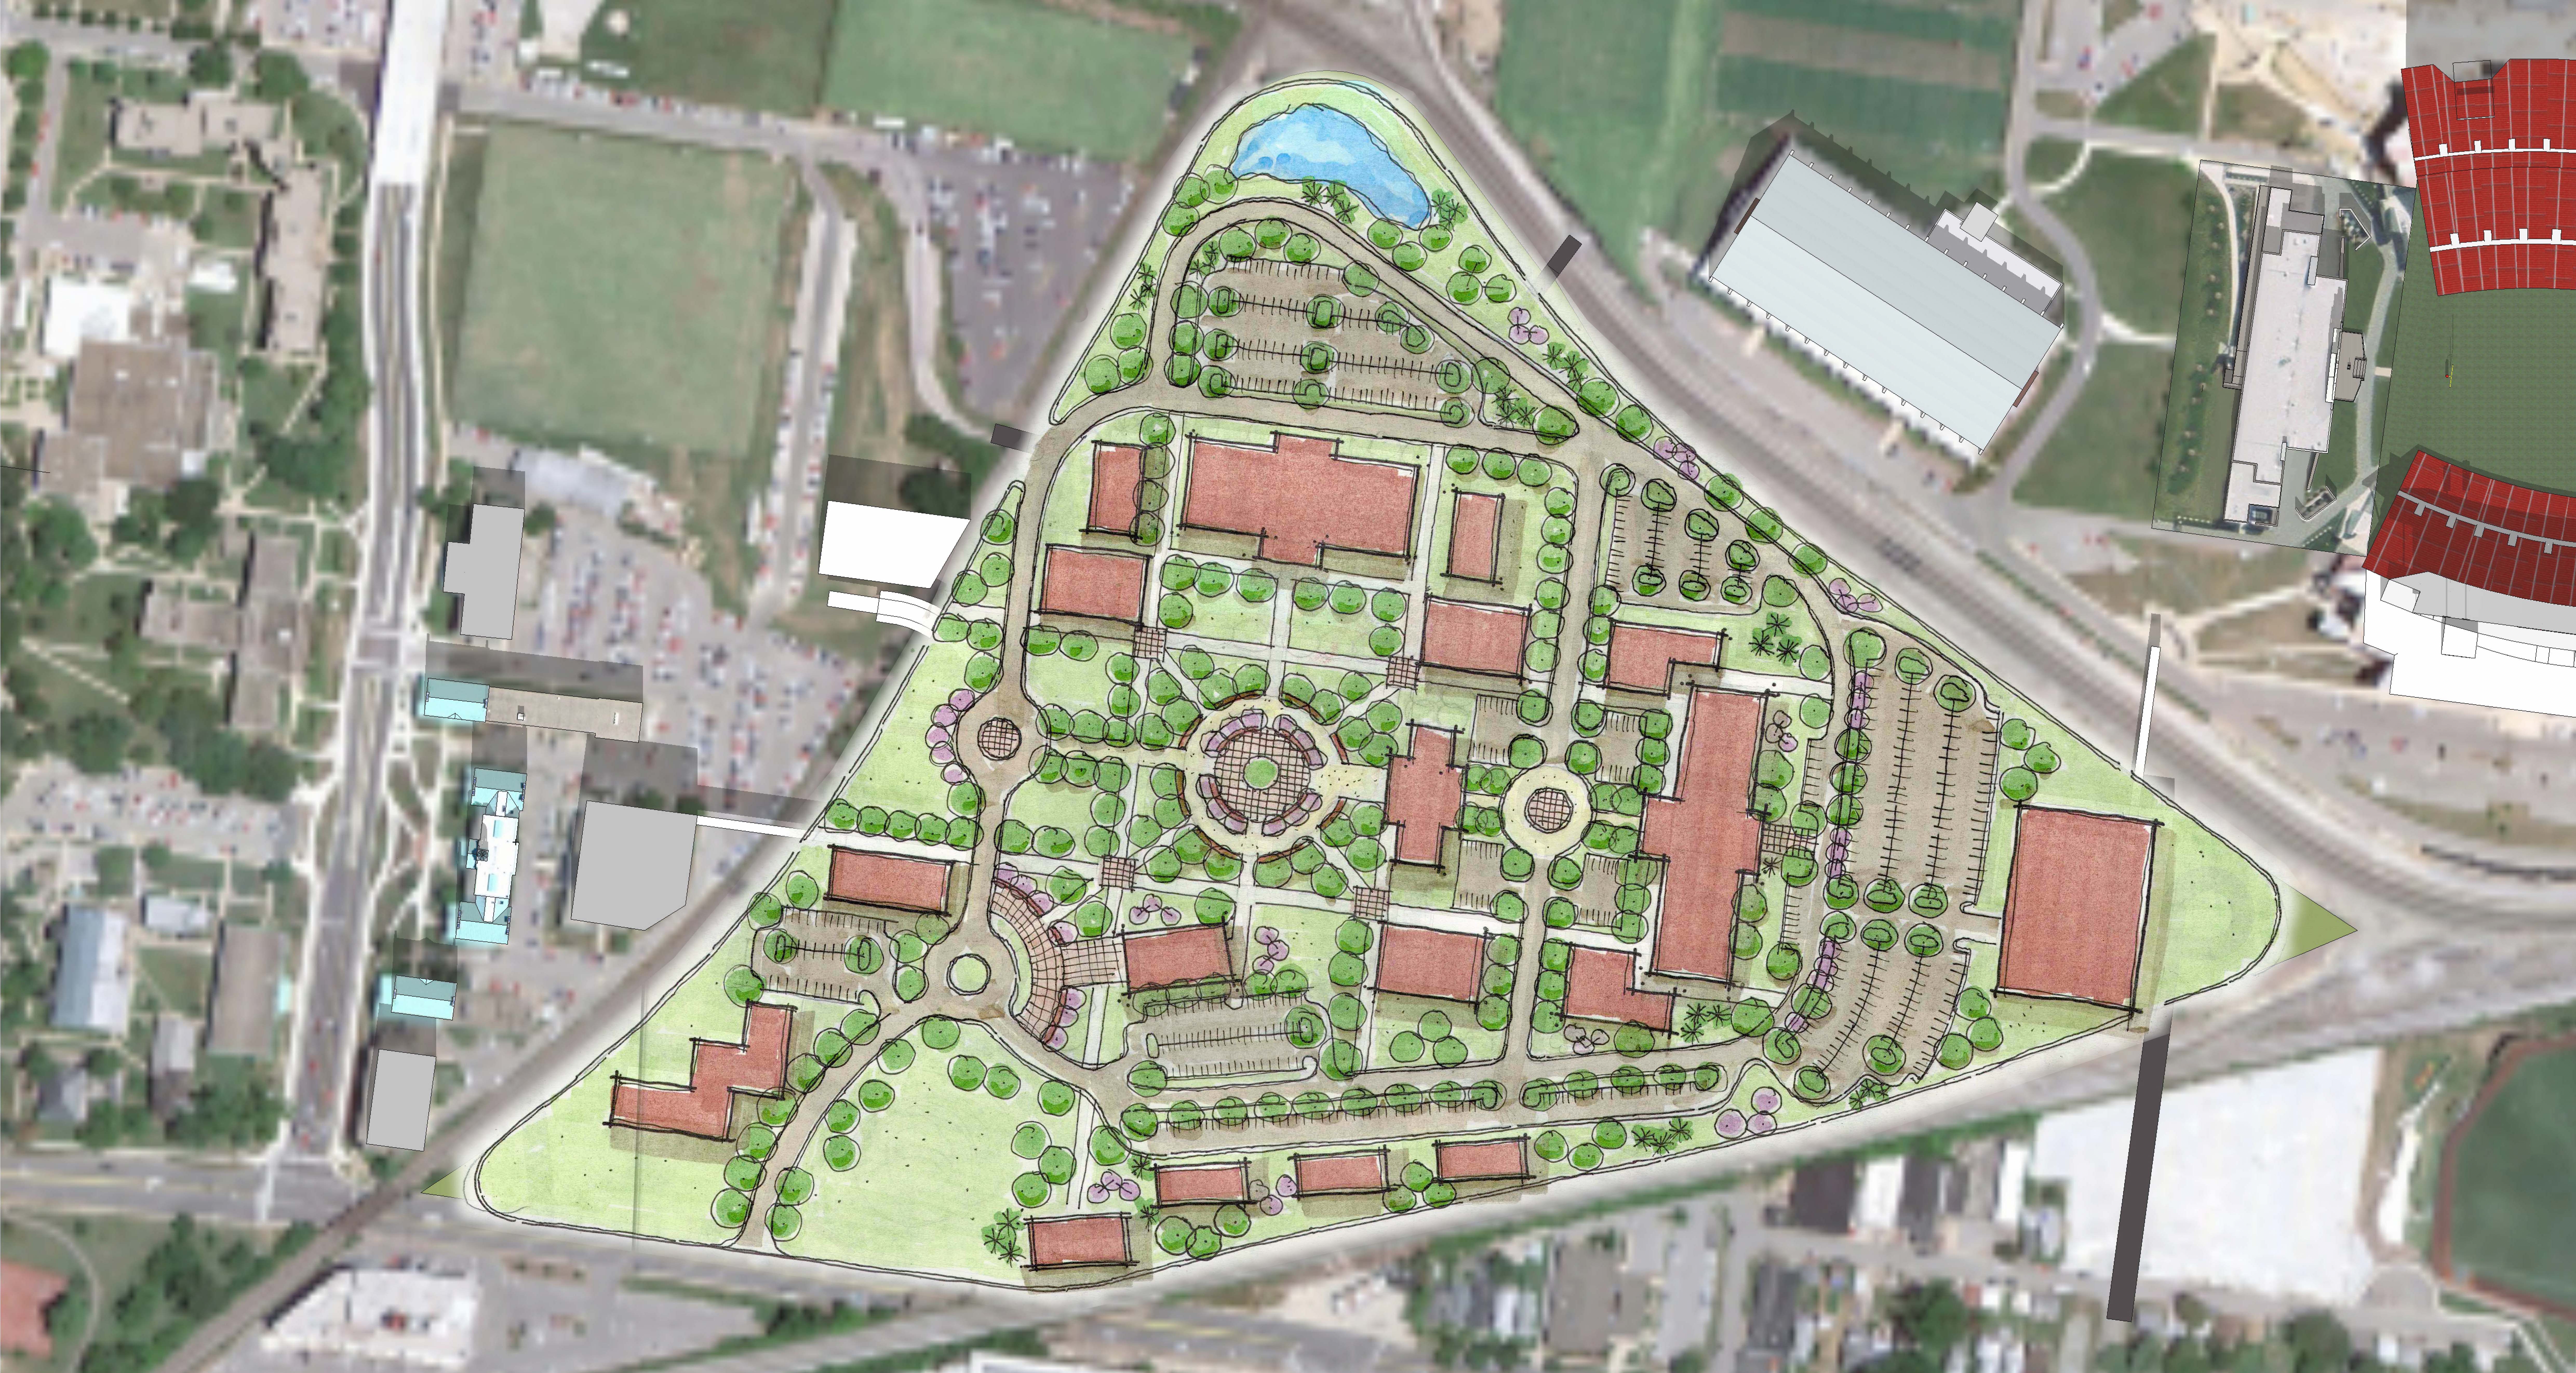 university-of-louisville-research-park-conceptual-master-plan-overlay-no-logo